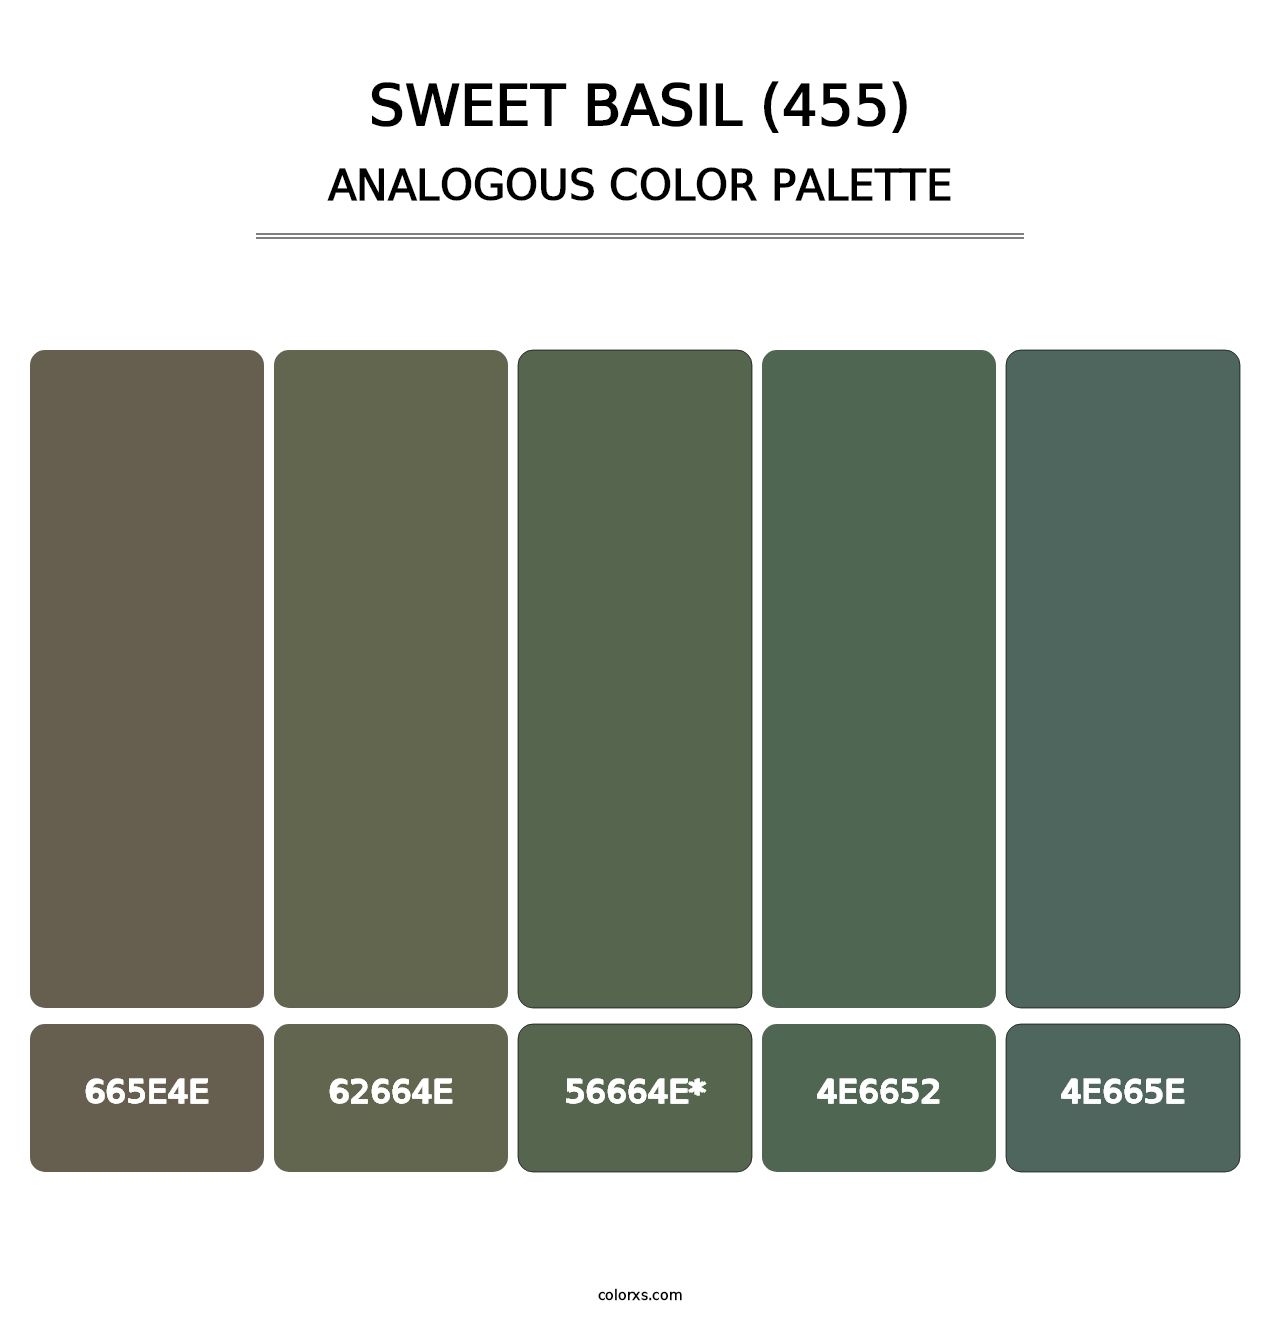 Sweet Basil (455) - Analogous Color Palette